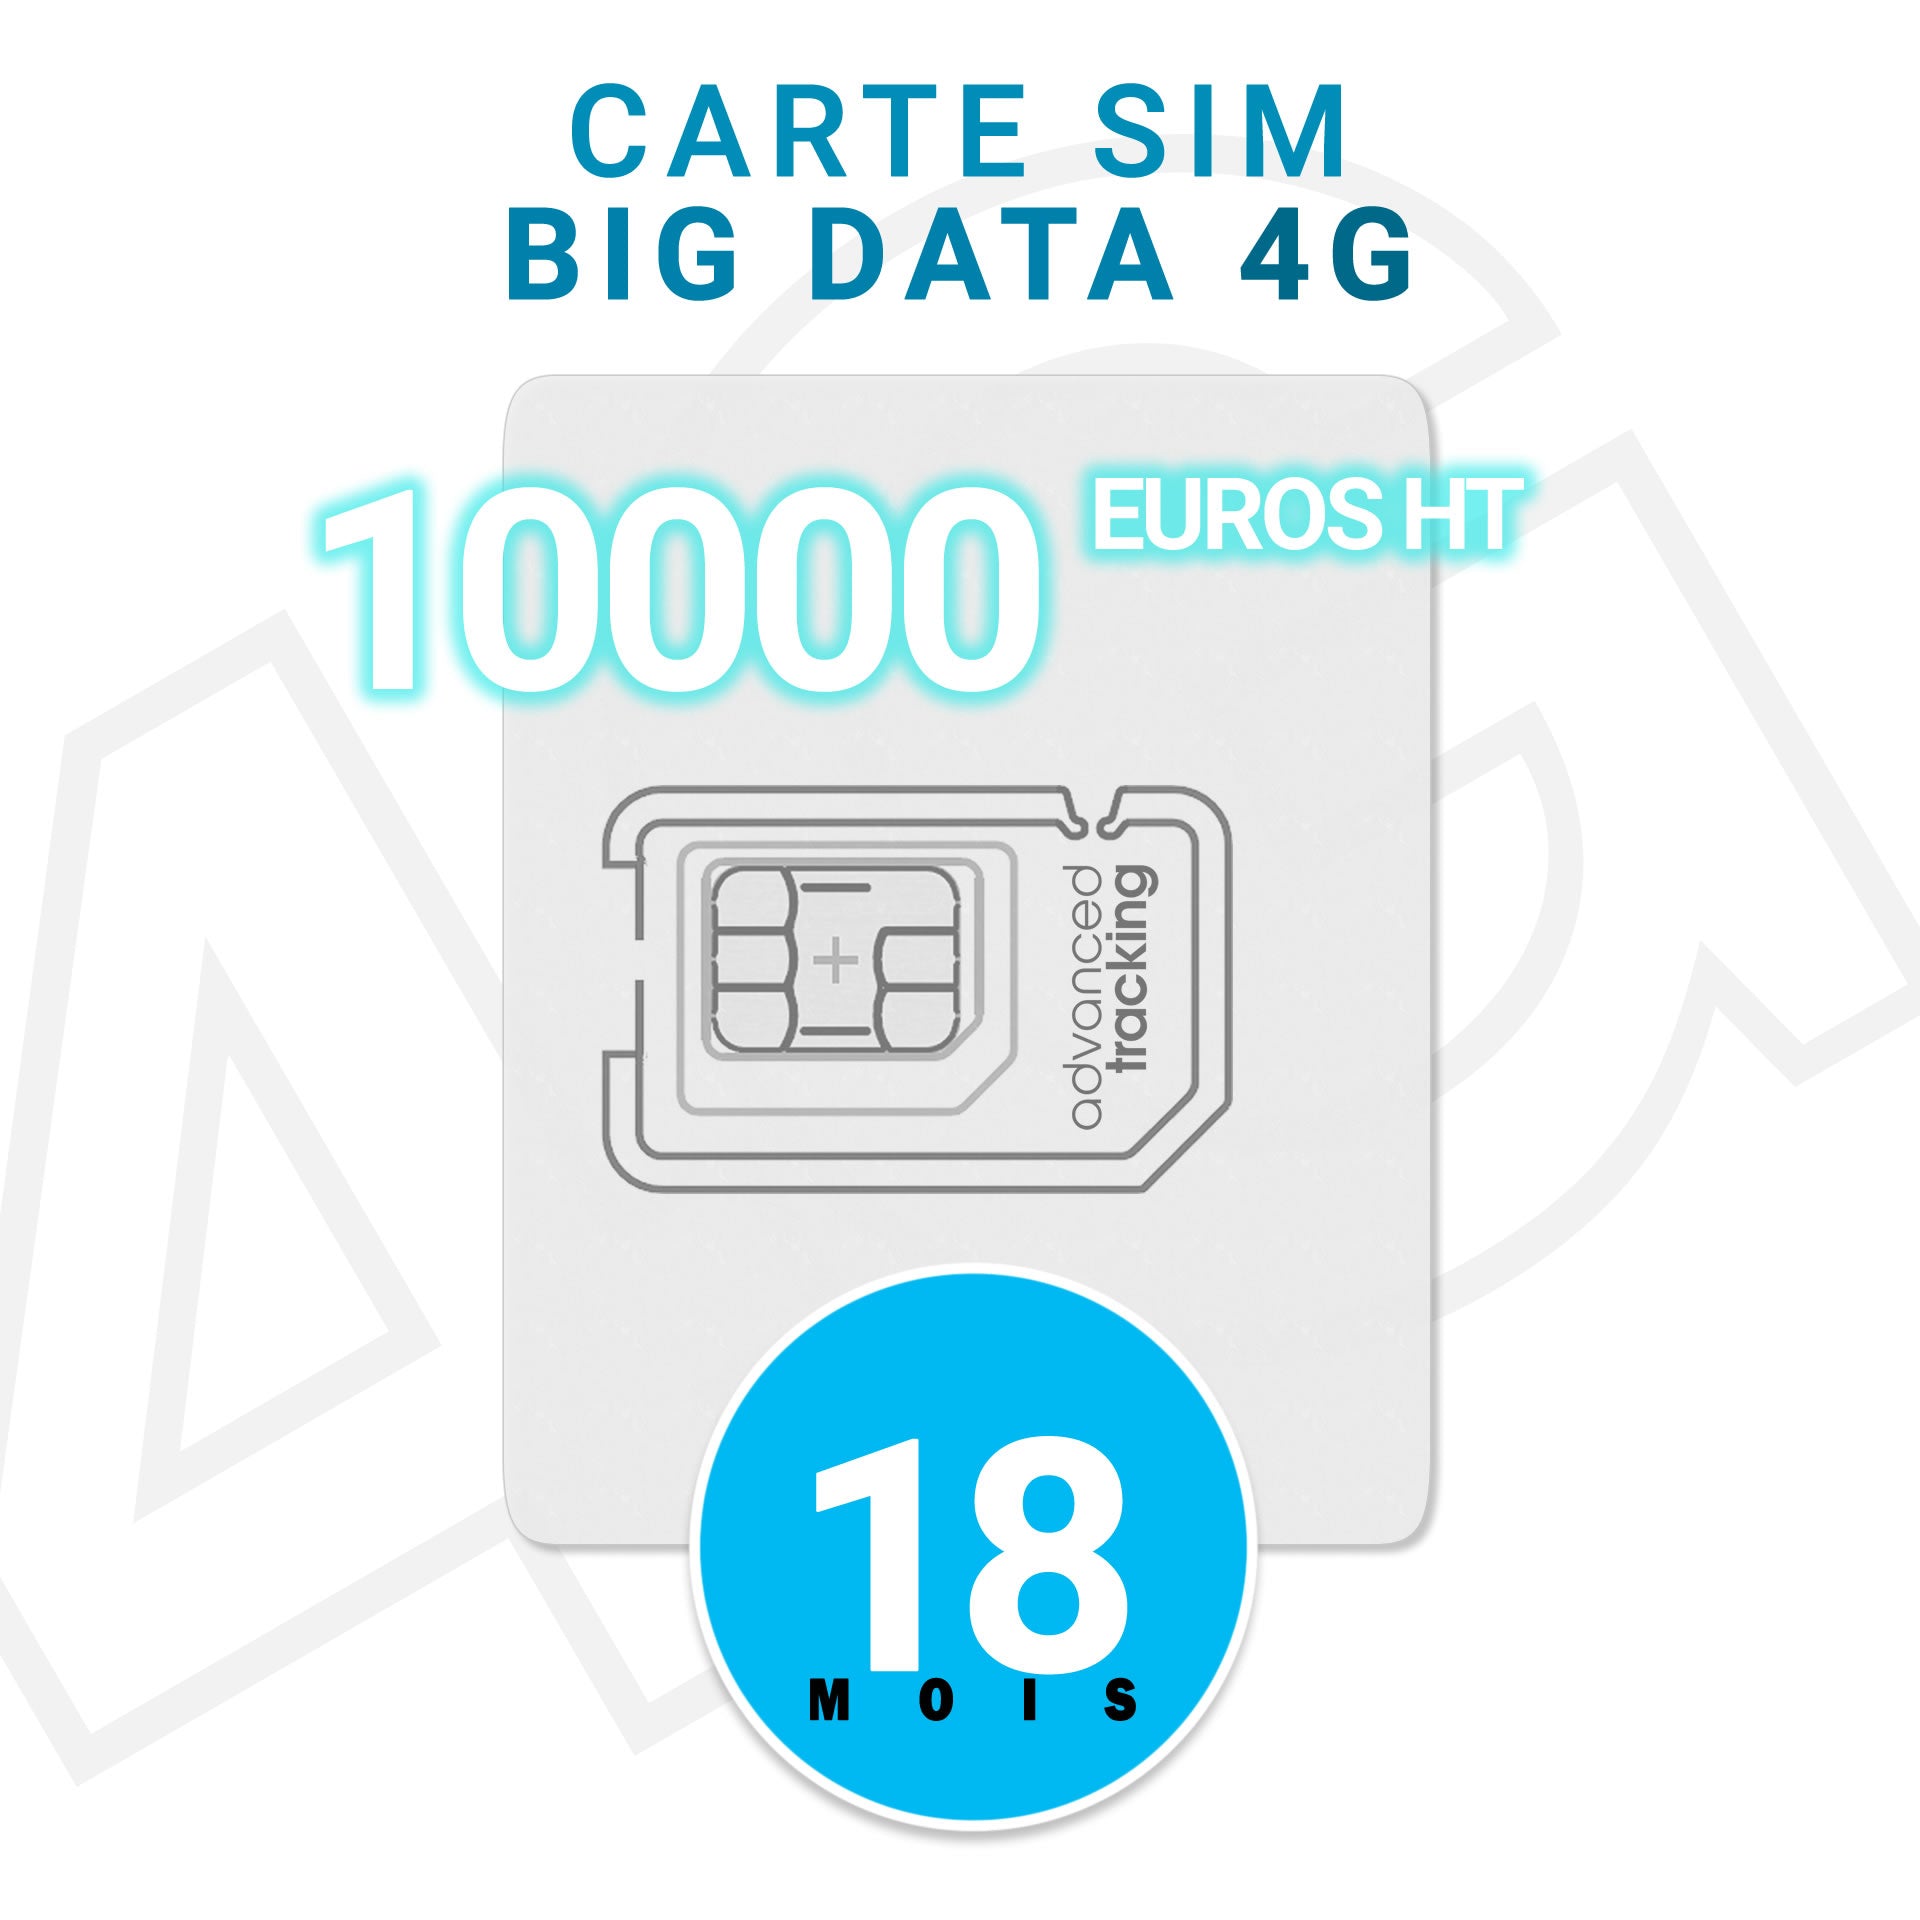 Carte SIM Prépayée BIG DATA 10.000 € HT - VALIDITE 18 MOIS